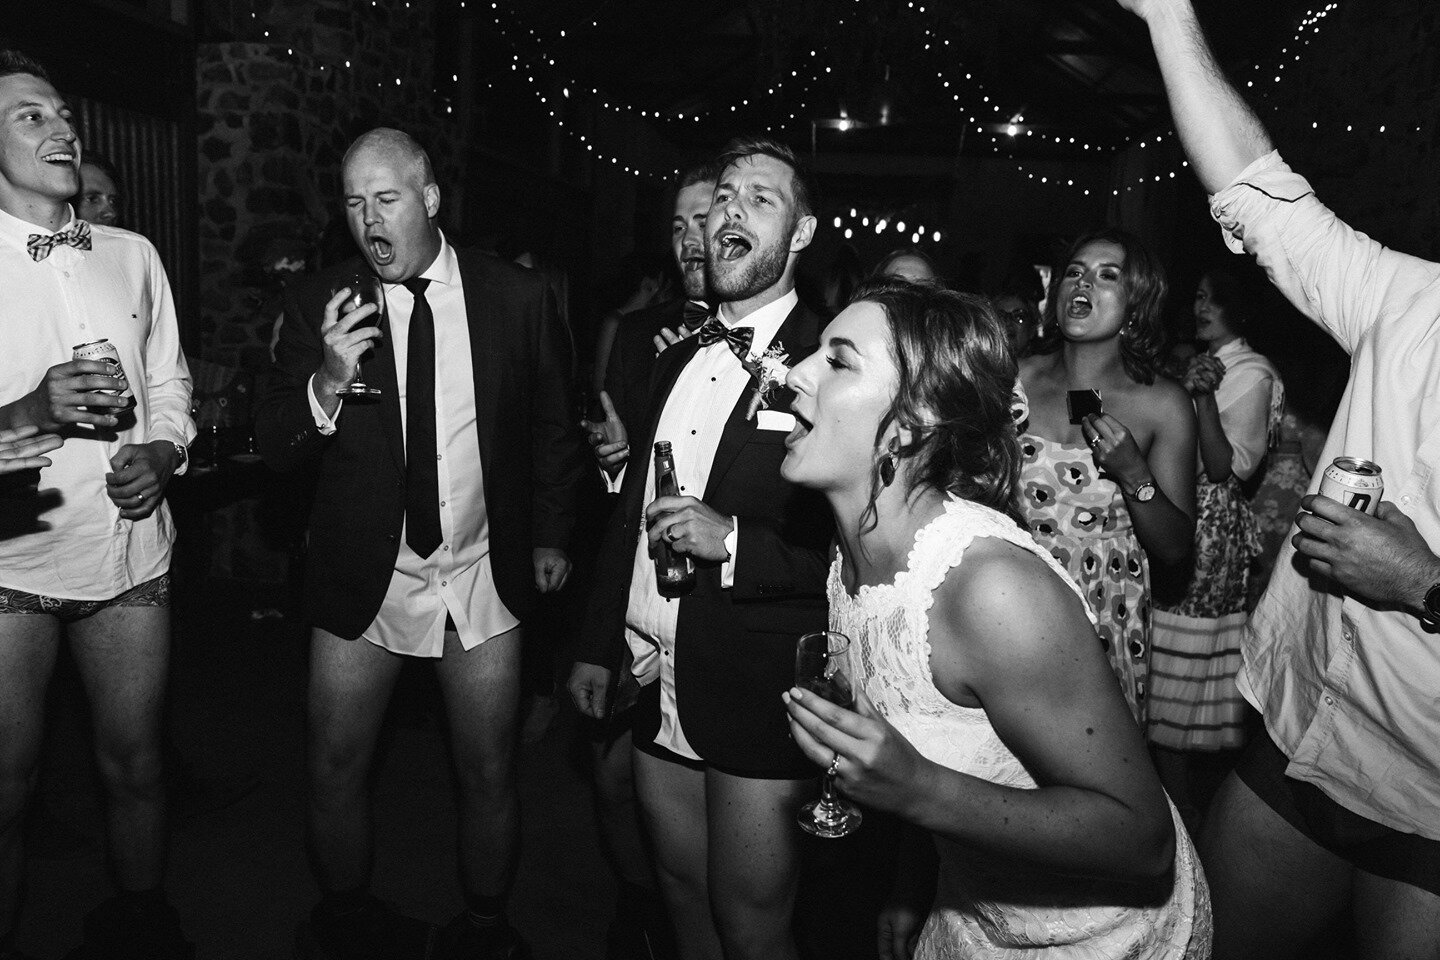 #FRIYAY! (Put on Eagle Rock at your own risk 🤘🏻).⁠
.⁠
.⁠
.⁠
.⁠
#littlecarphotography #australianweddingphotographer #wedding #adelaideweddingphotographer #adelaidebride #momentsovermountains #weddingadventures #southaustralia #indieweddingphotograp